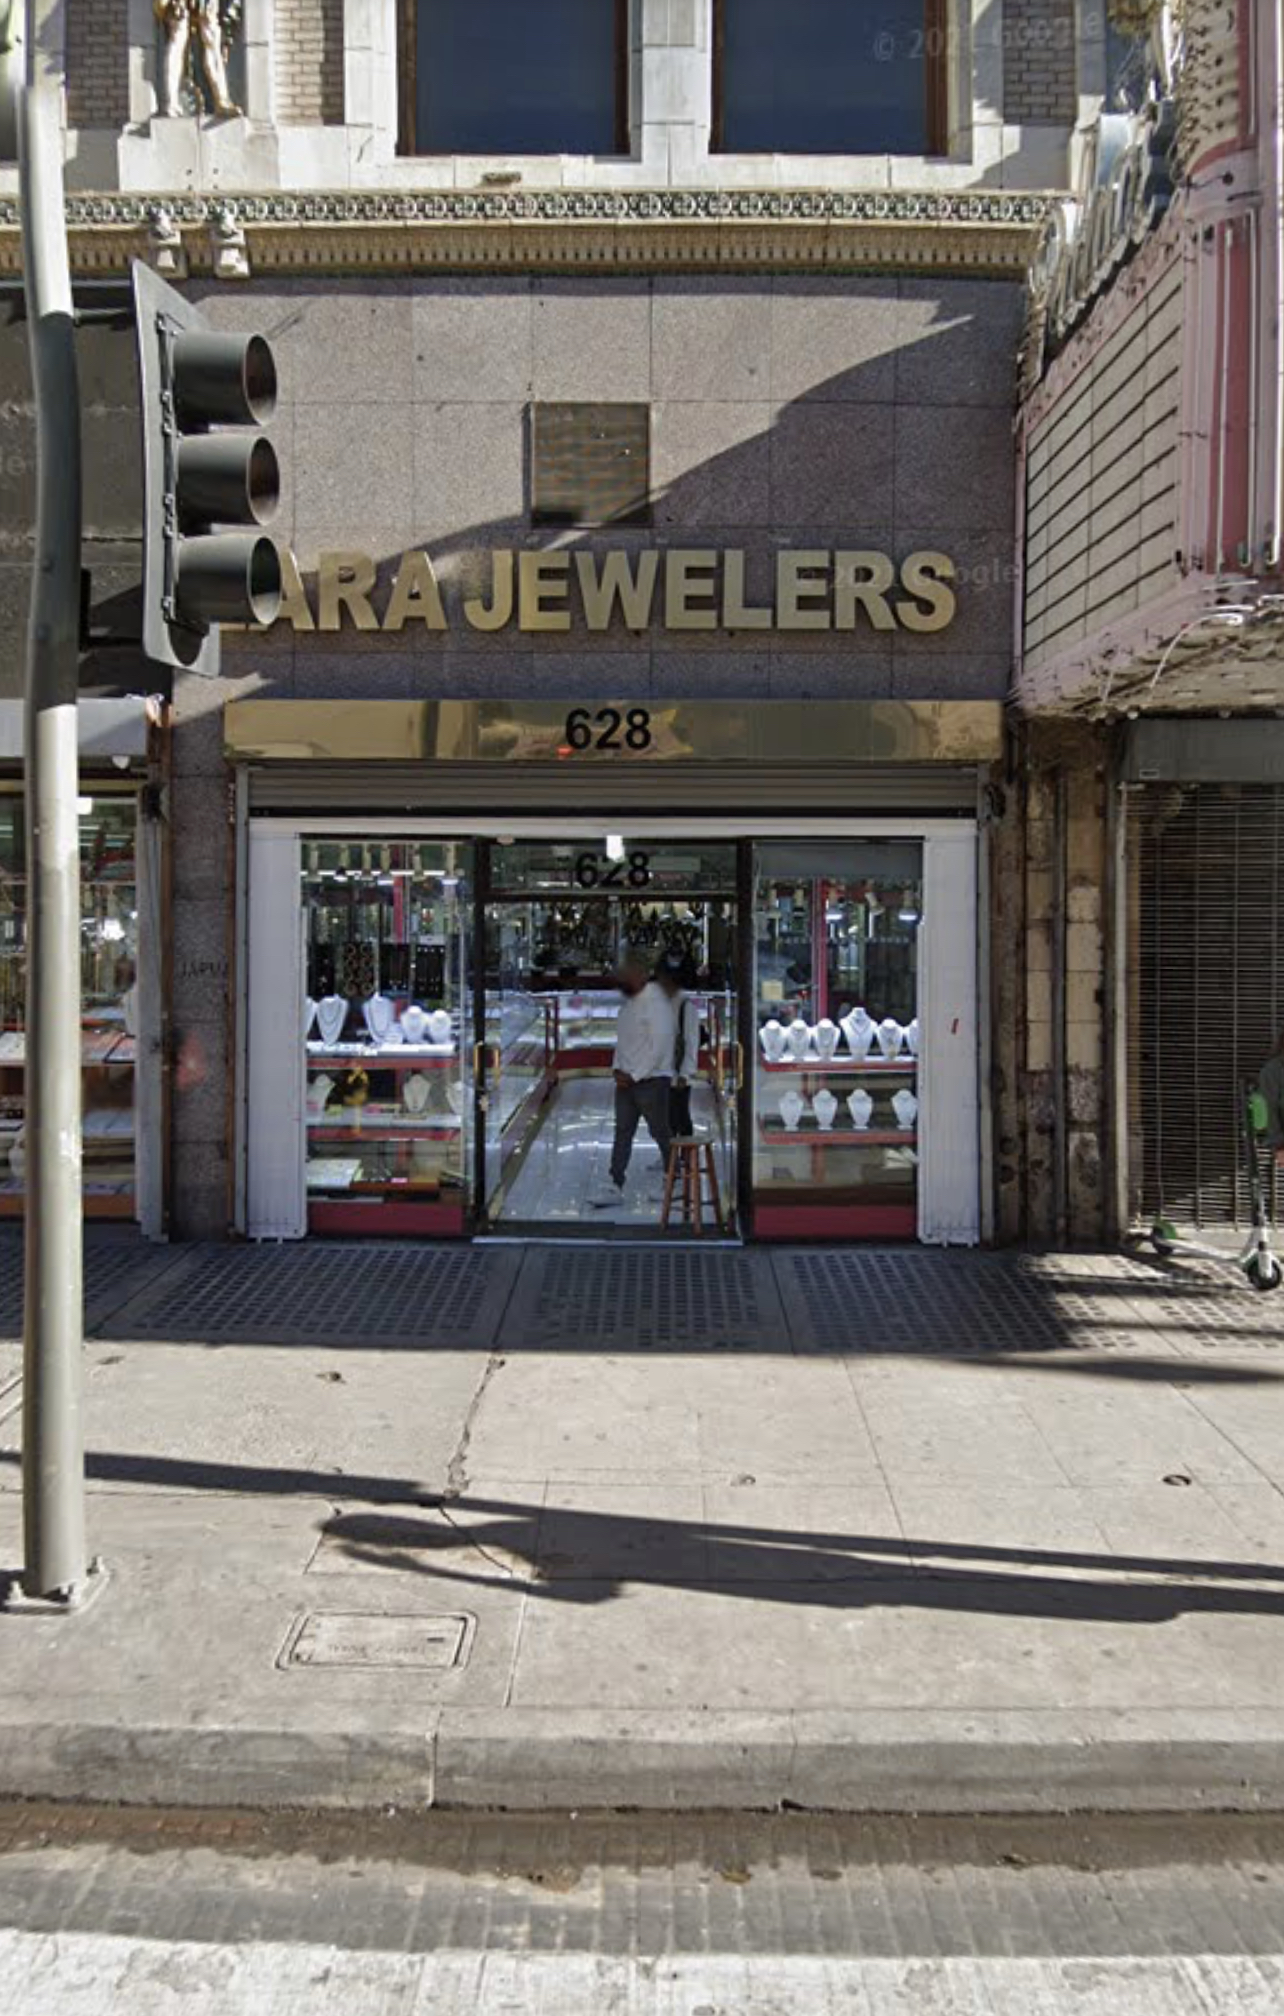 Zara Jewelers: The Best Jeweler In LA